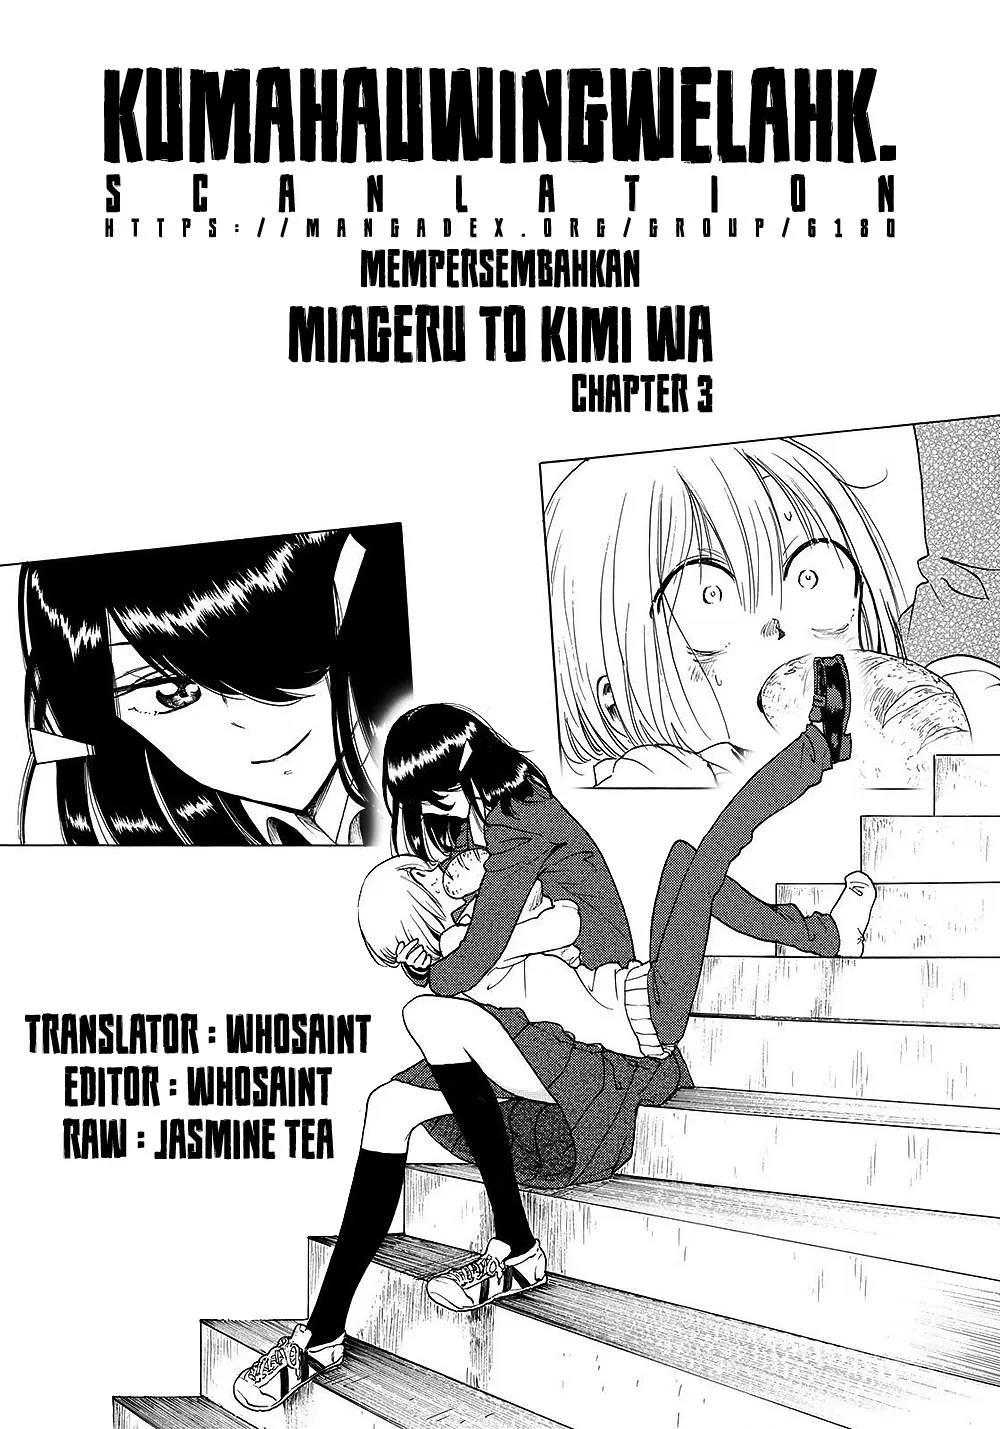 Miageru to Kimi wa Chapter 03